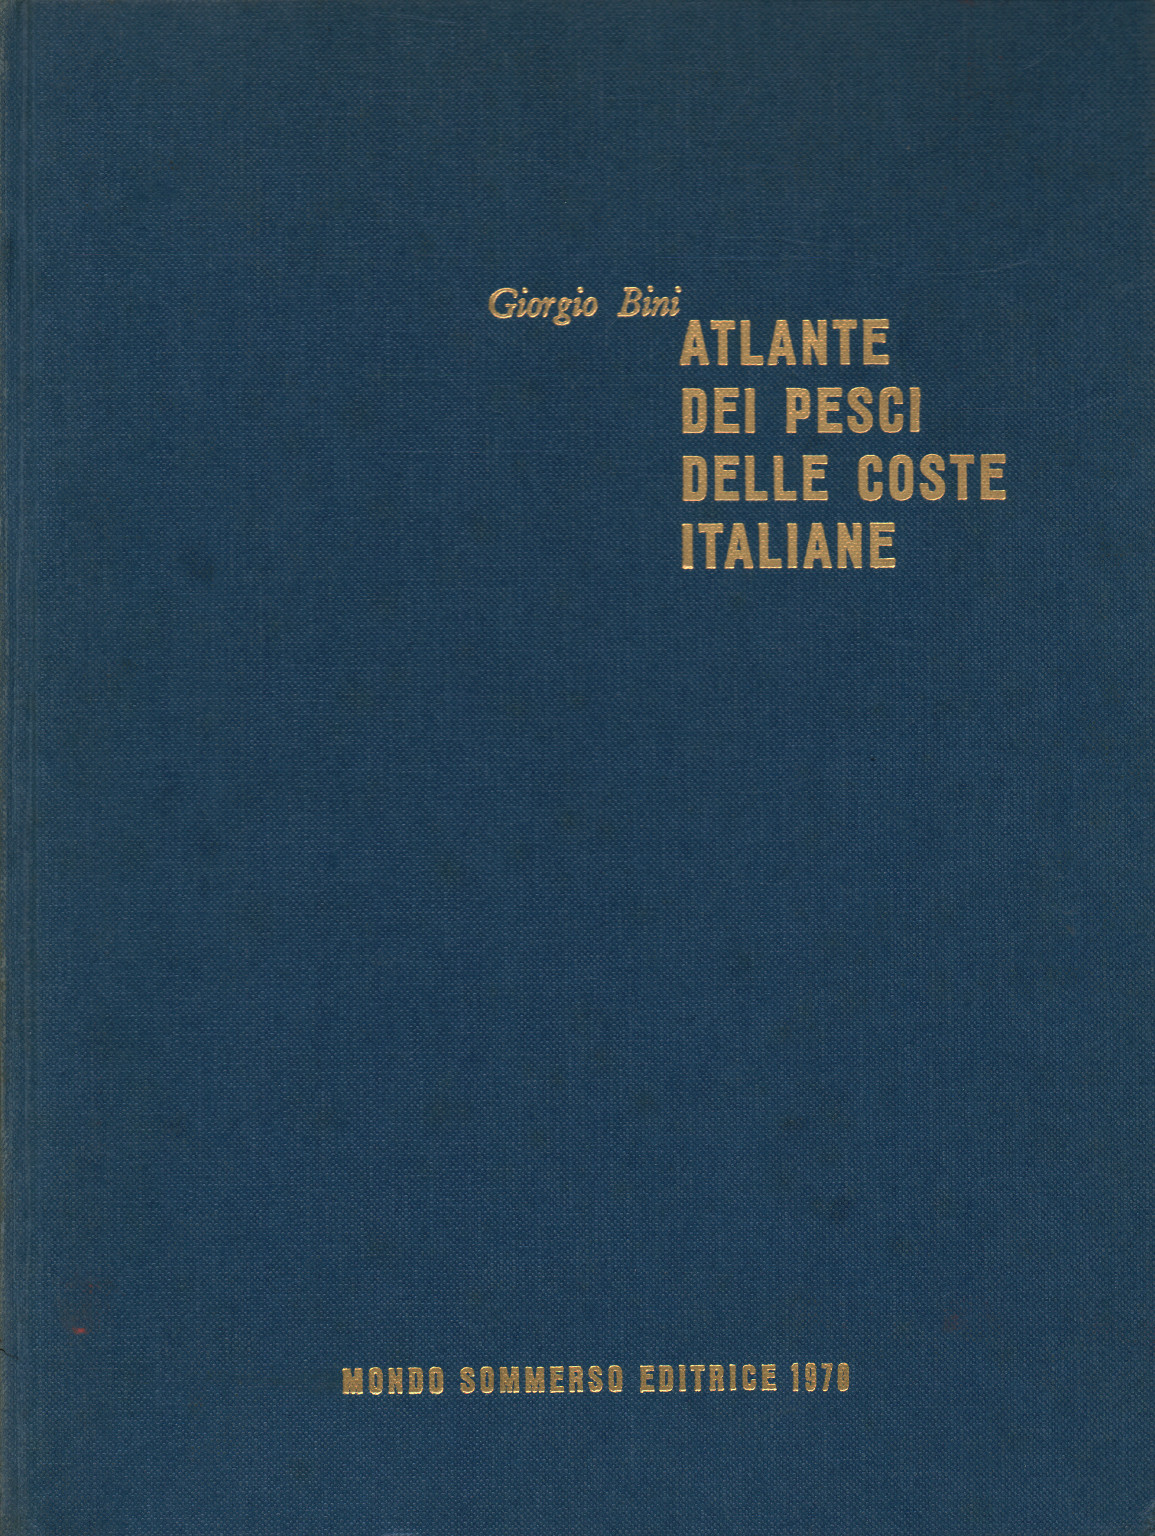 Atlas des poissons des côtes italiennes, Volume III, Giorgio Bini